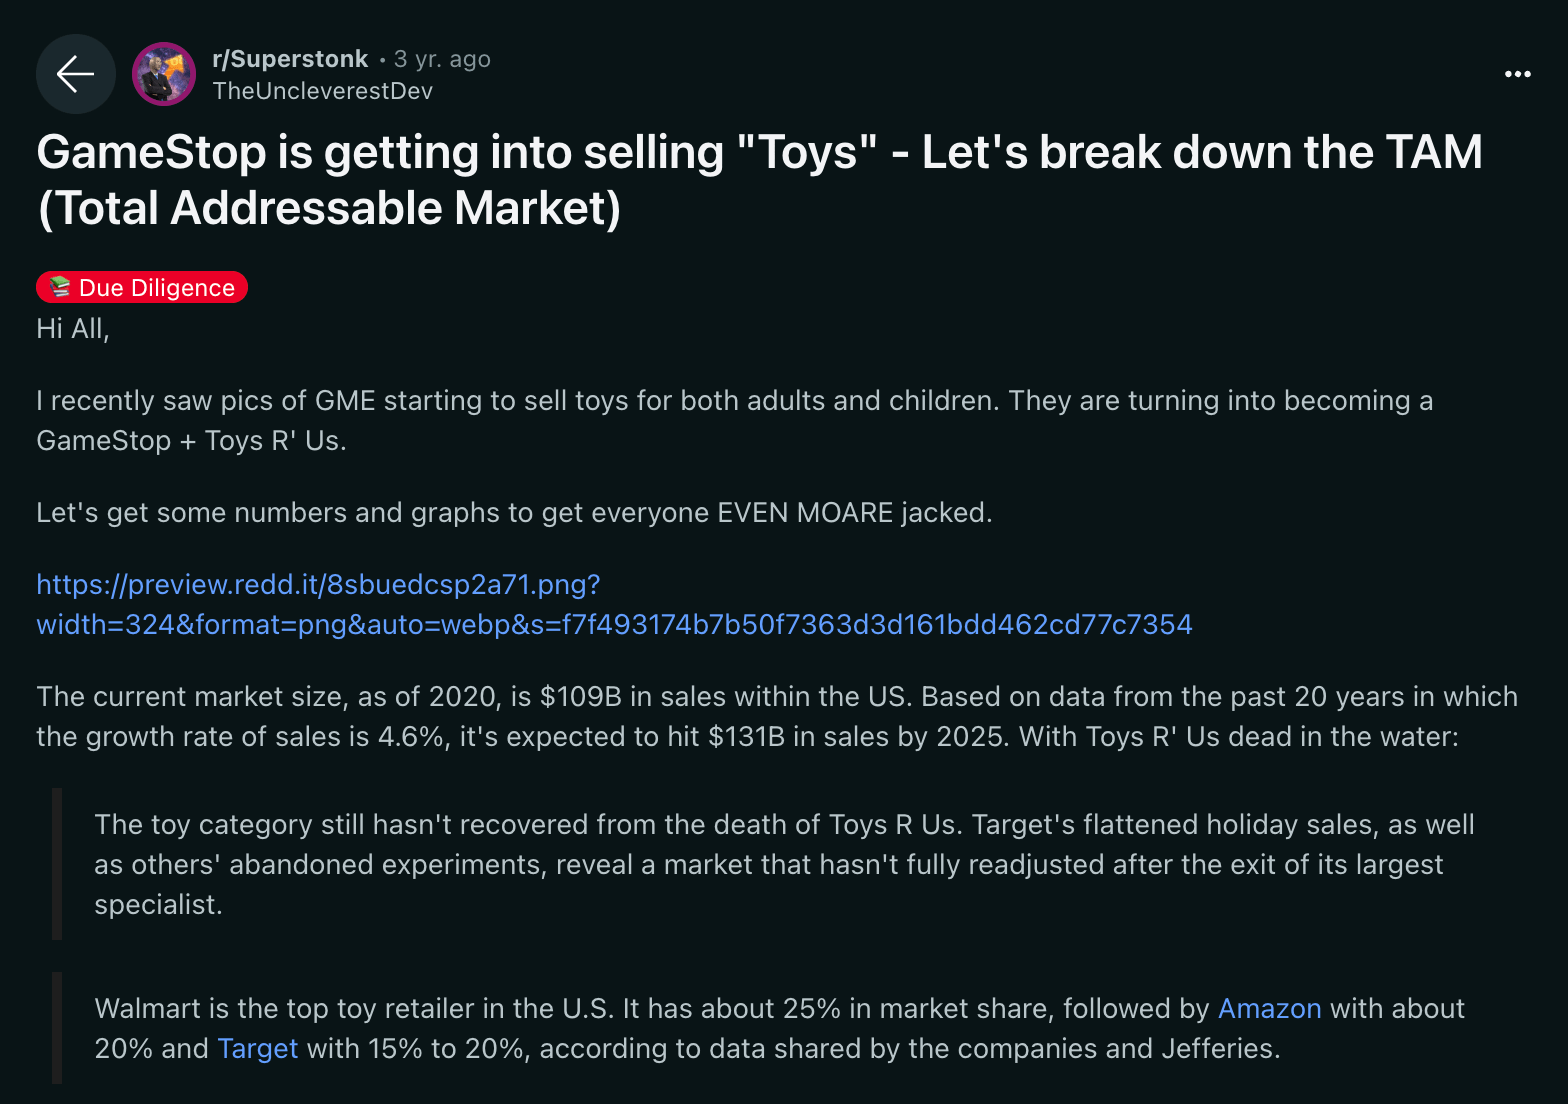 Redditor evaluating the TAM regarding GameStop selling toys